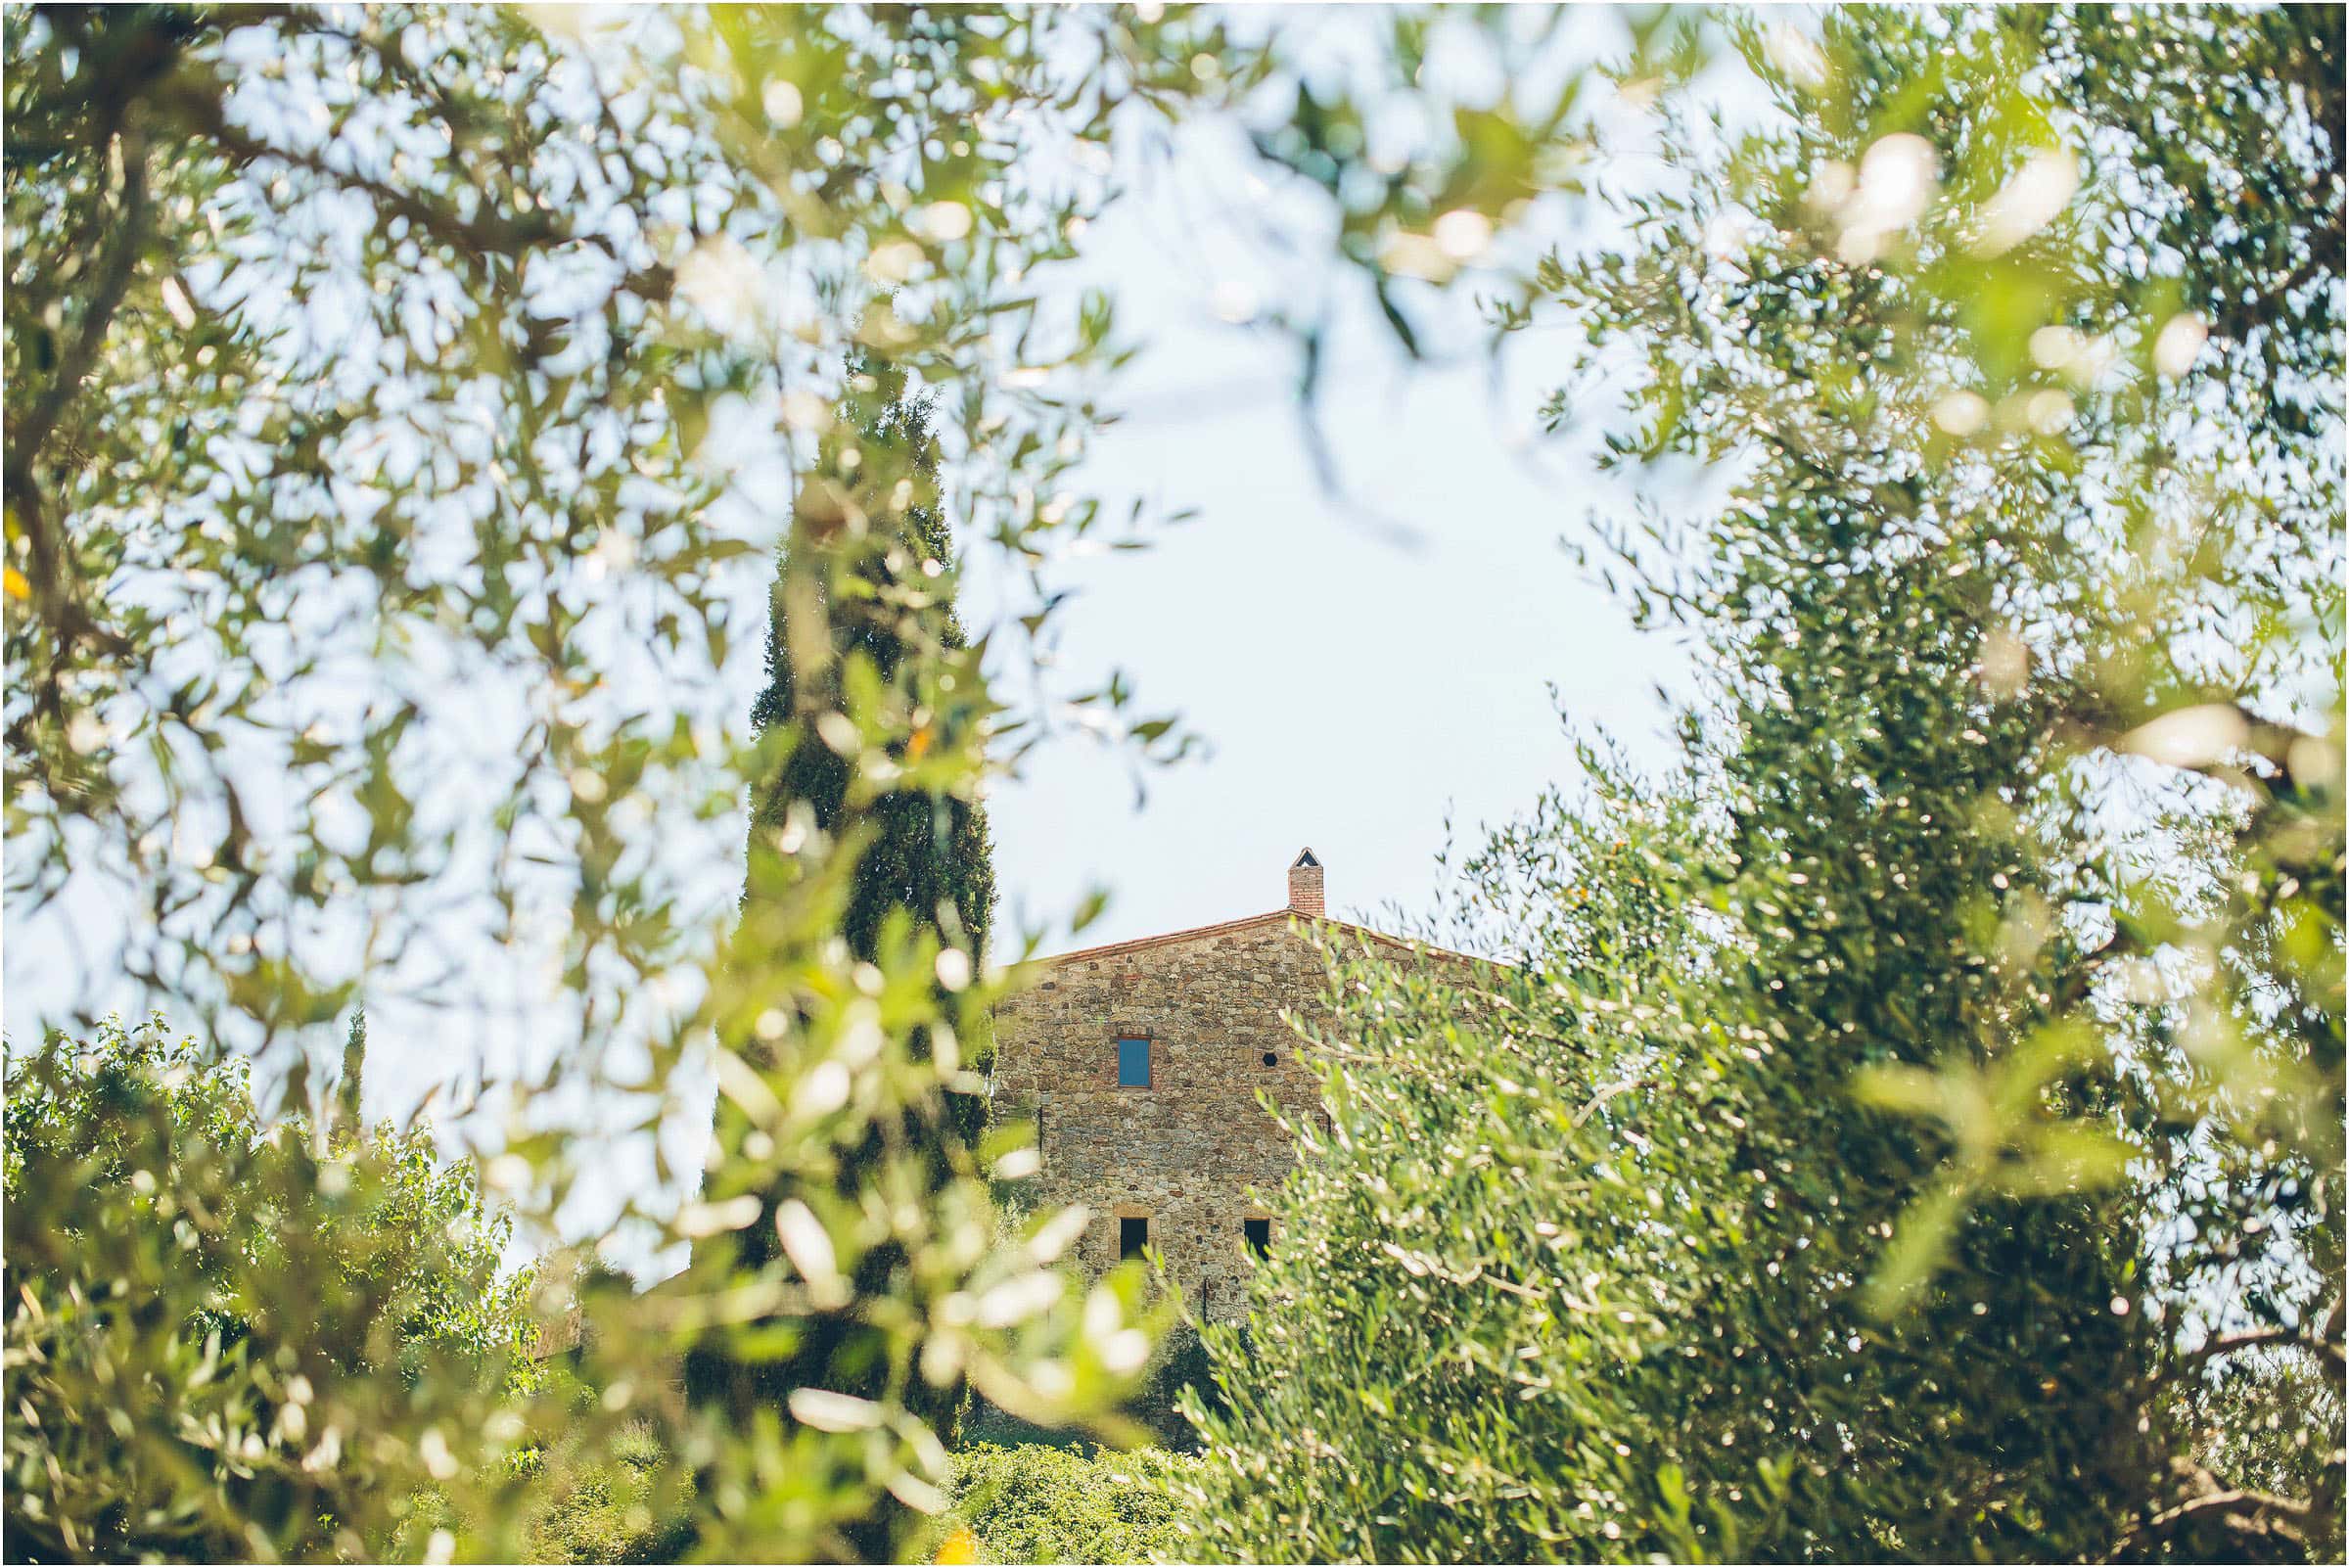 Exterior photo of Castello di Vicarello in Tuscany taken through some trees on the morning of a wedding